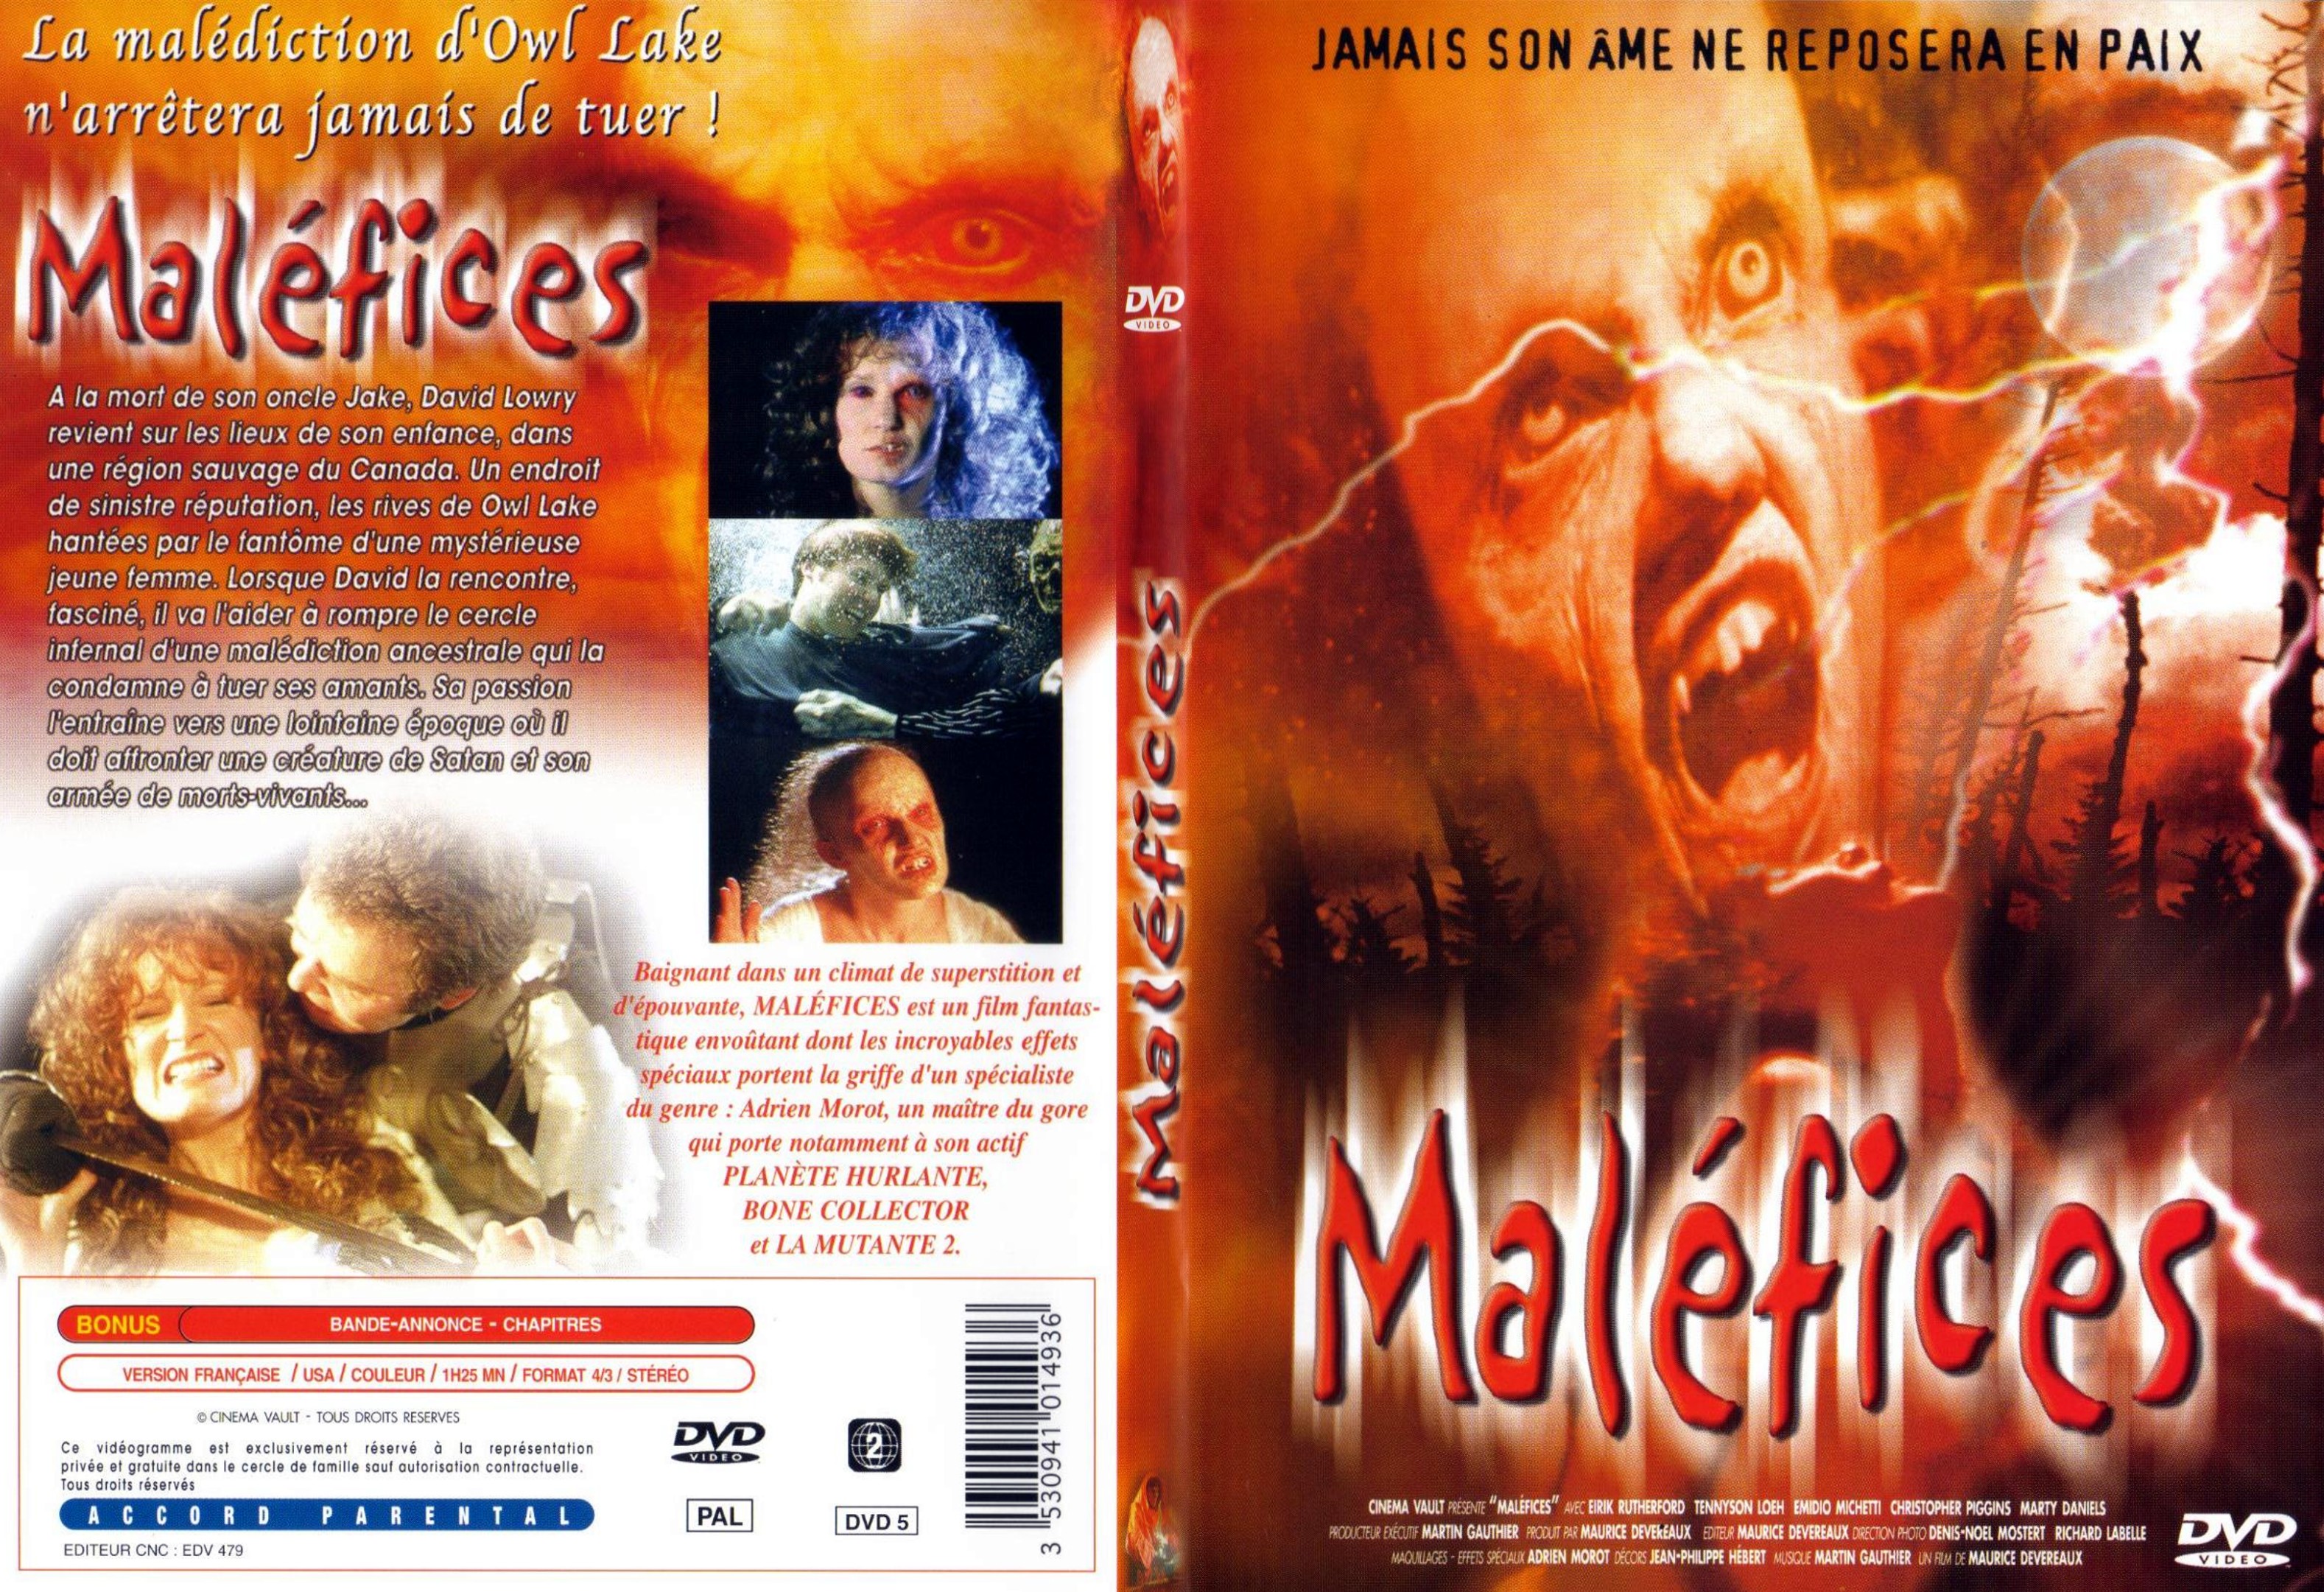 Jaquette DVD Malefices - SLIM